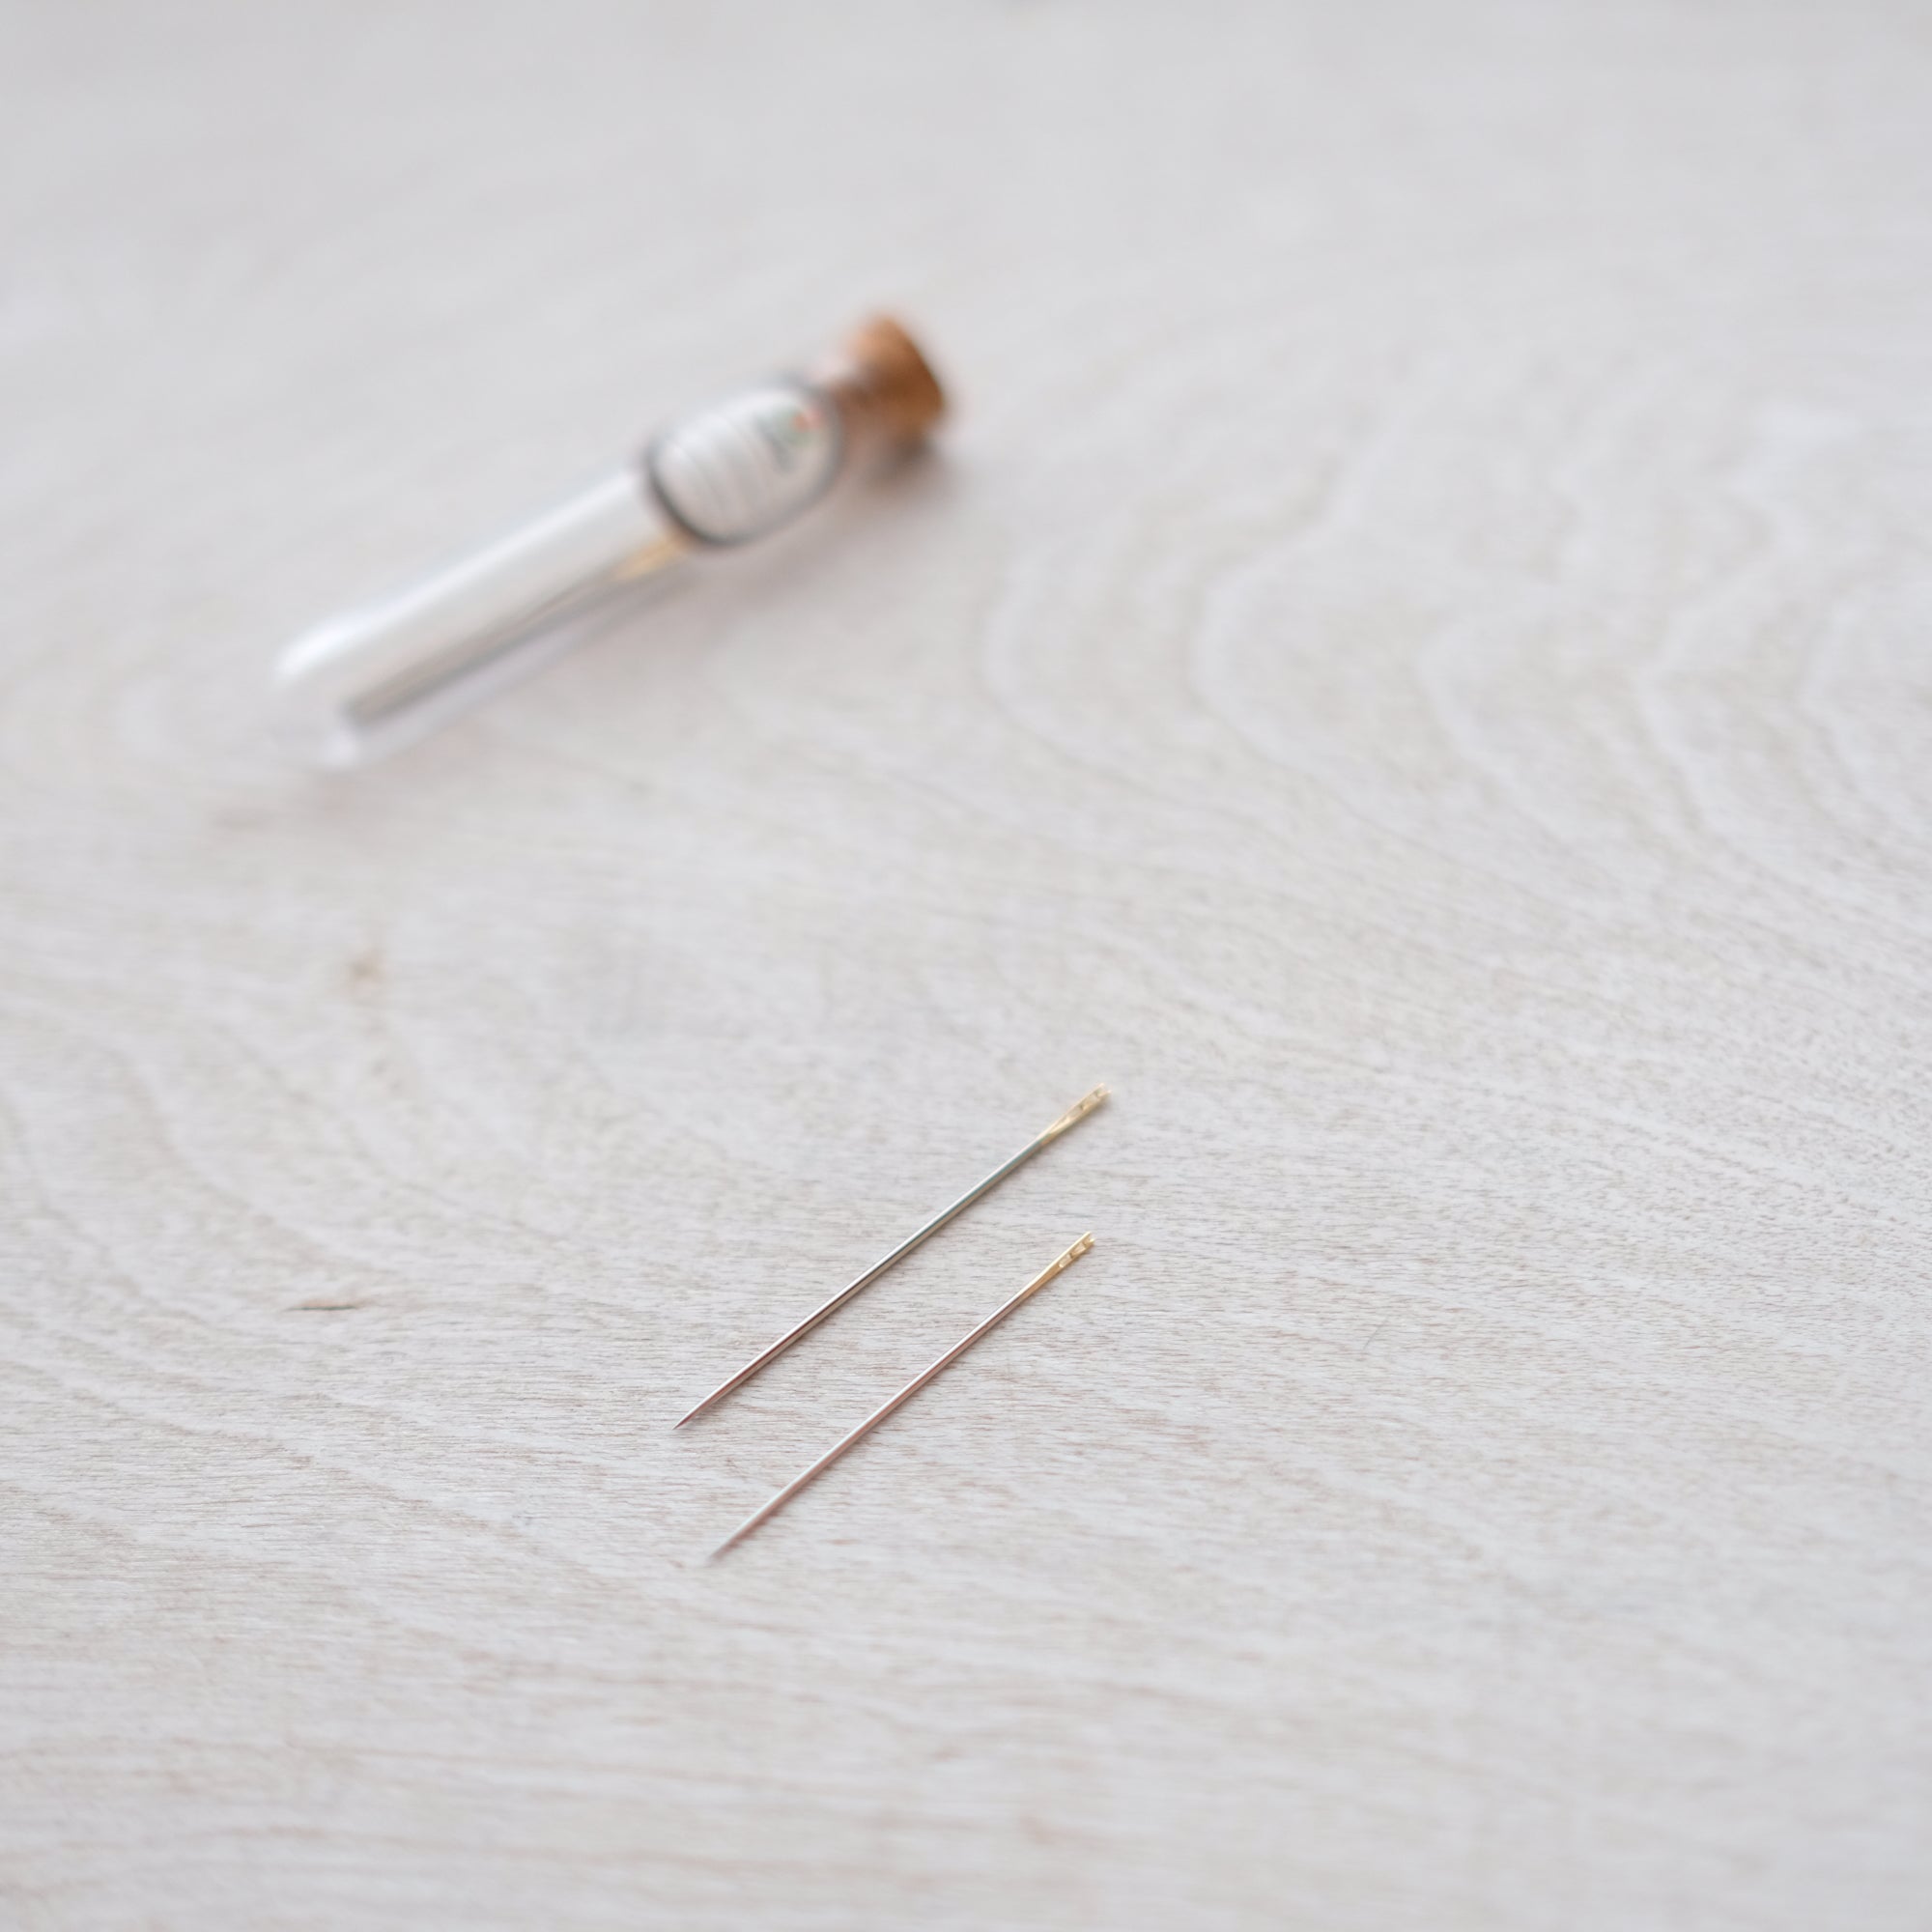 Label: Easy Thread Needles - Assorted